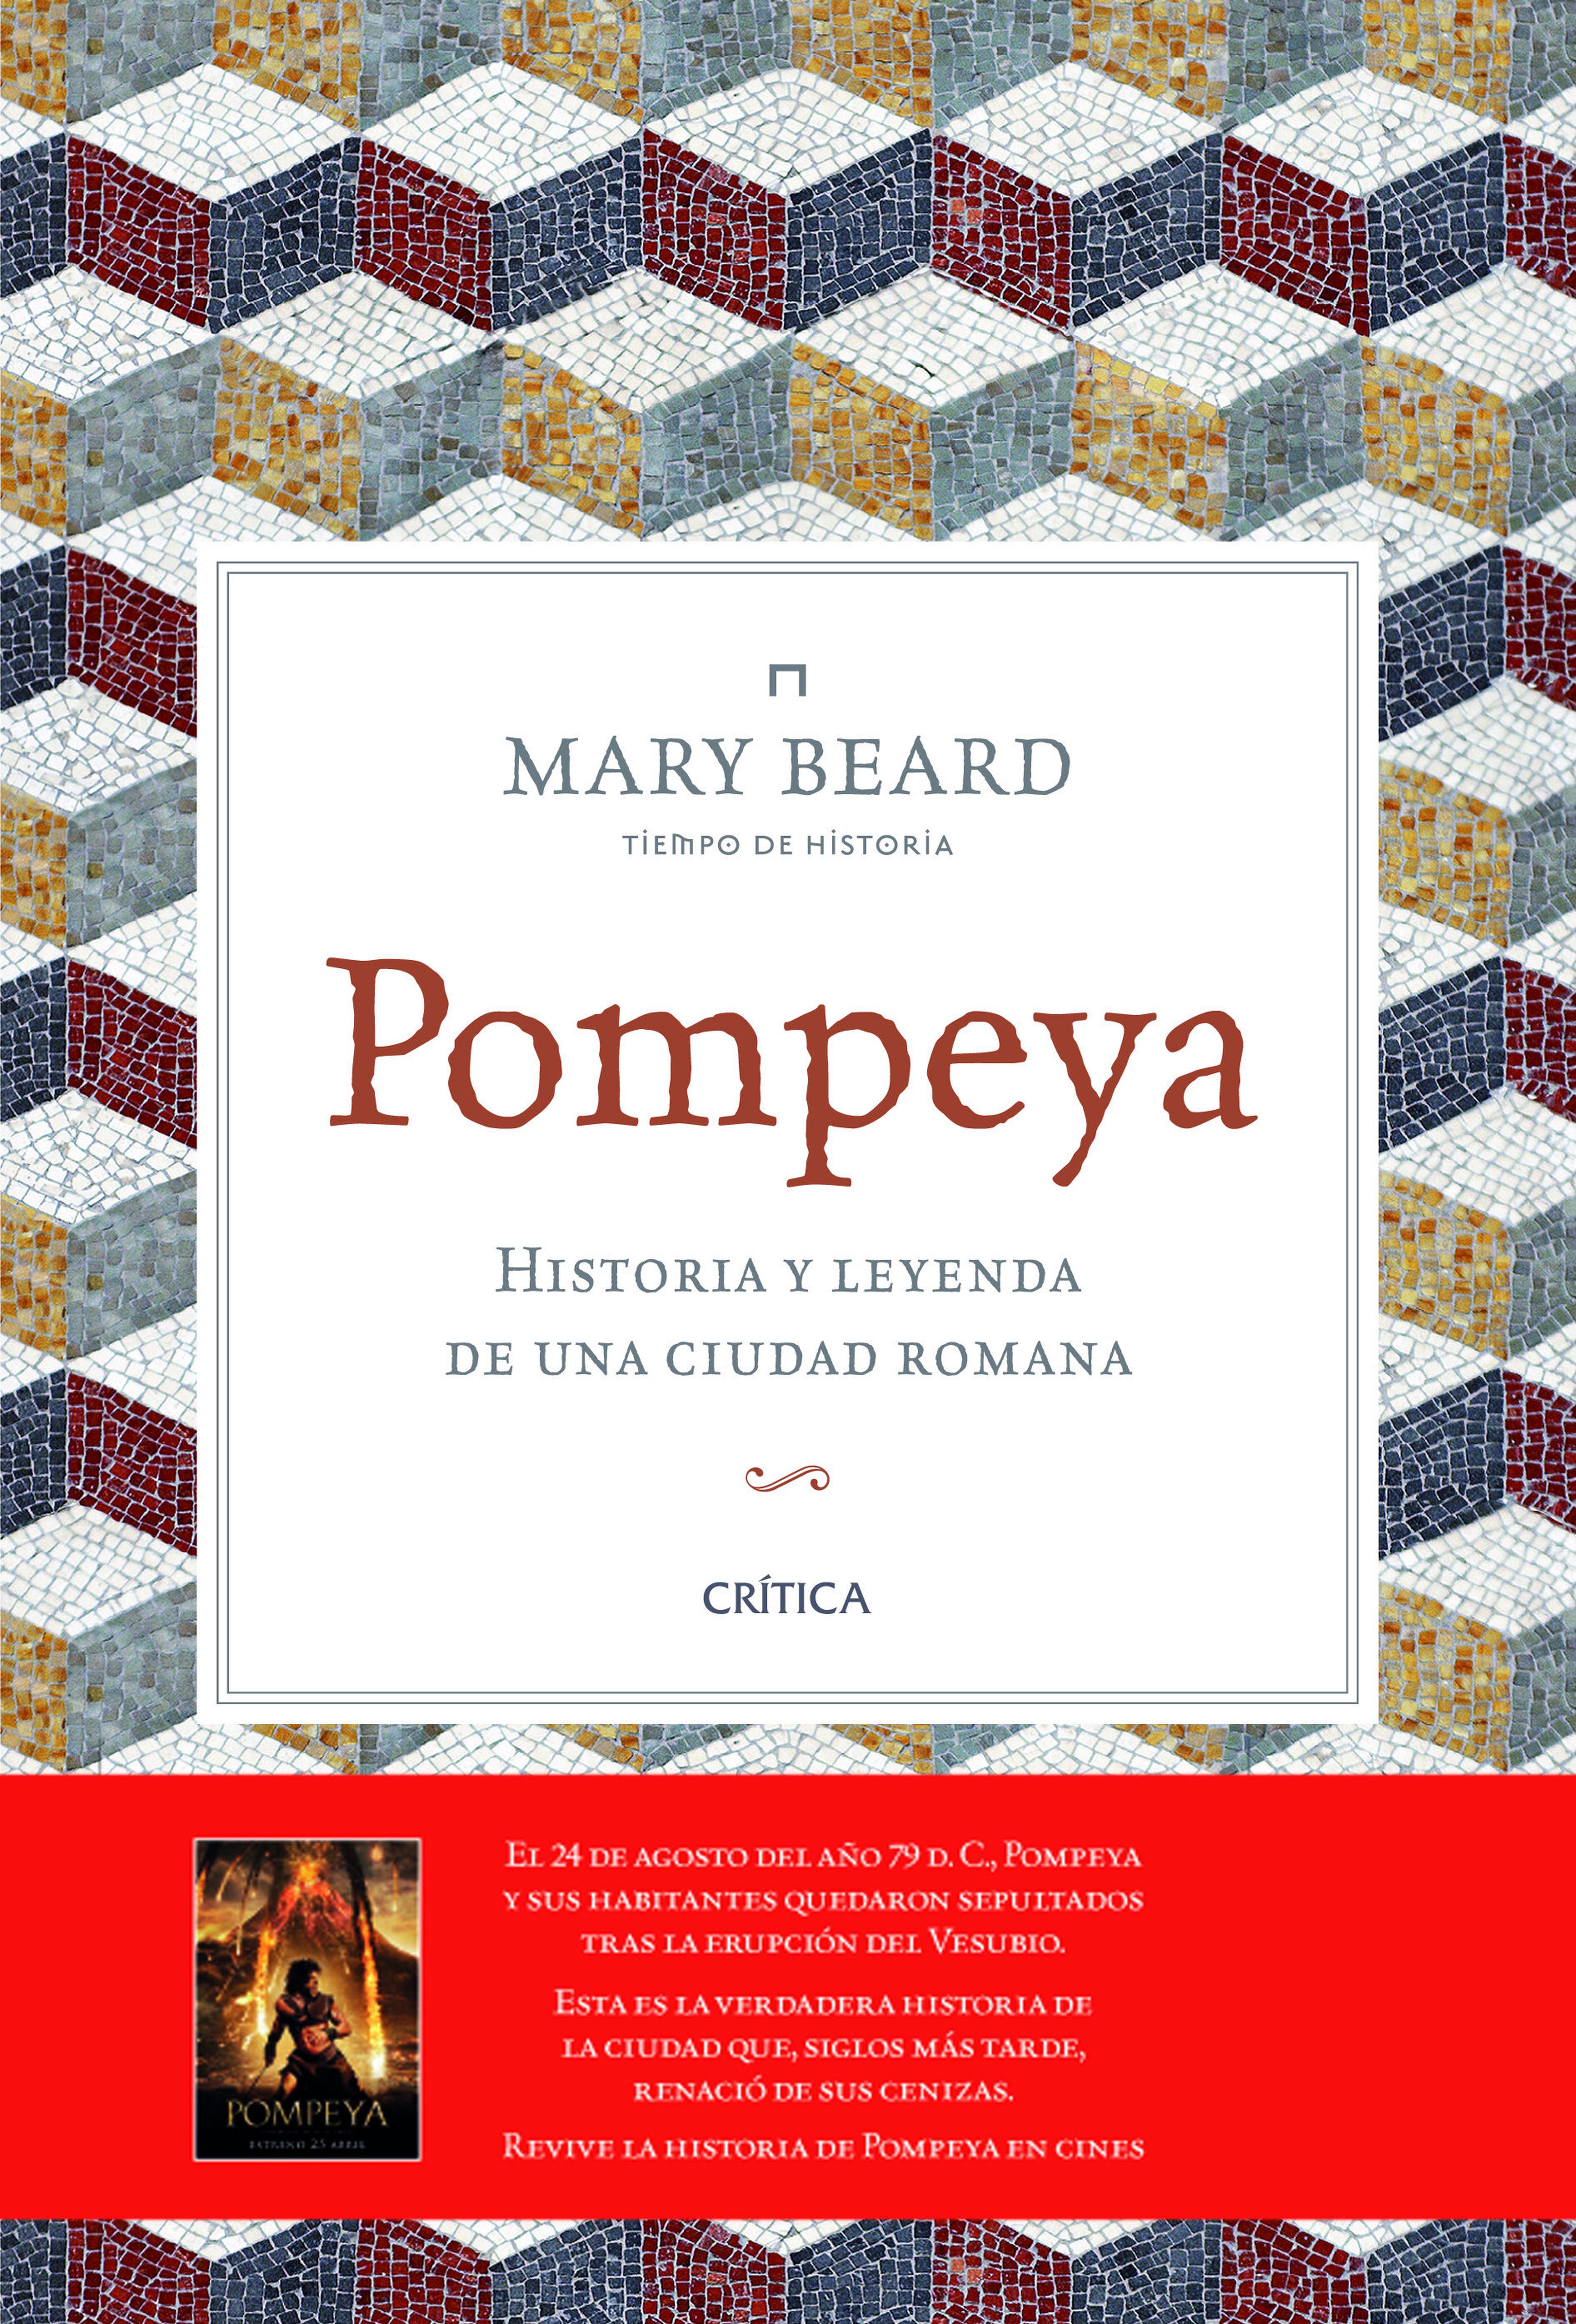 Concurso Pompeya: ¡regalamos 5 novelas!